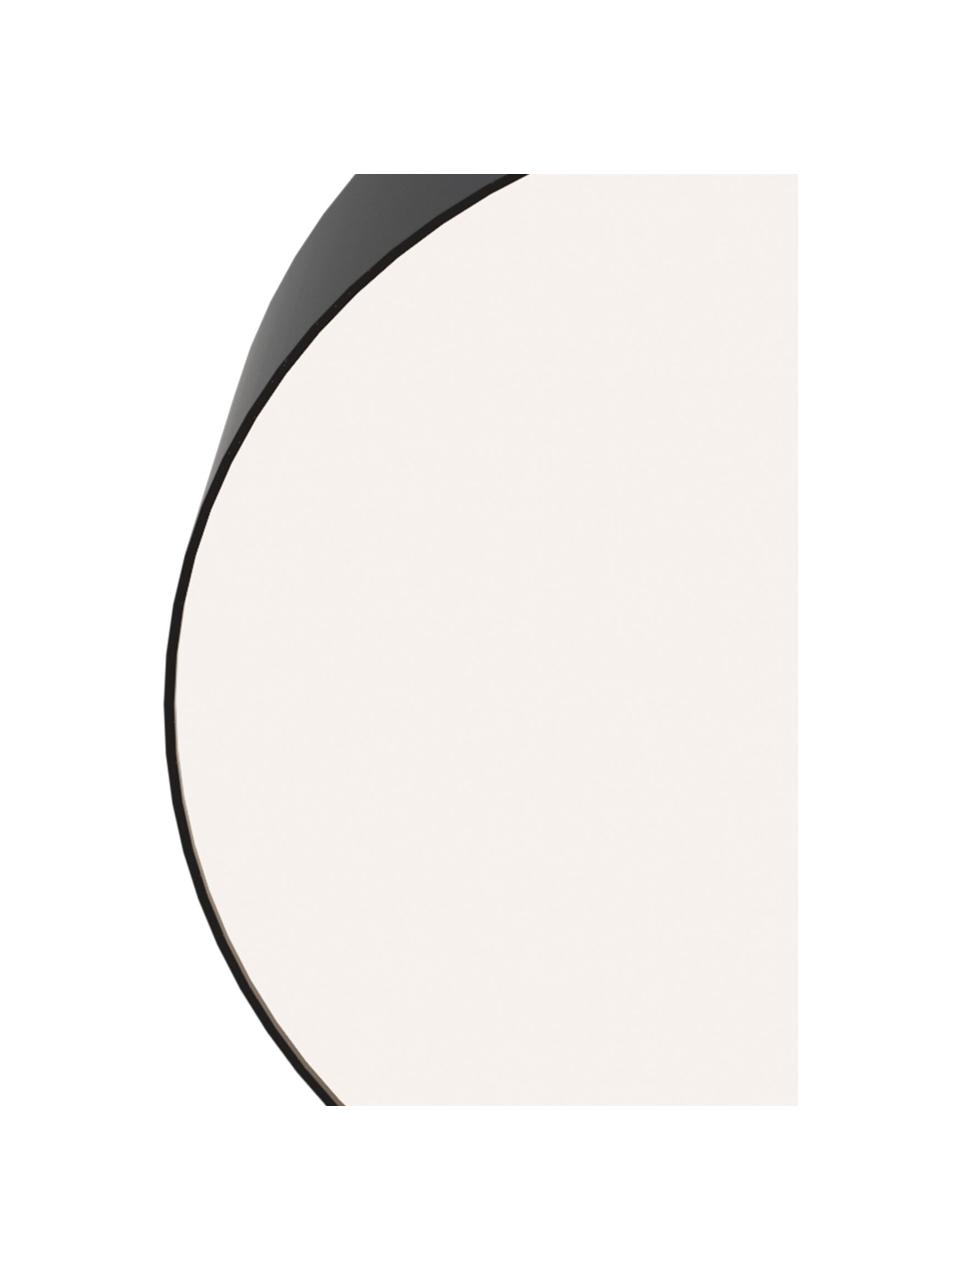 Plafón LED Zon, Pantalla: aluminio recubierto, Negro, blanco, Ø 40 x Al 6 cm